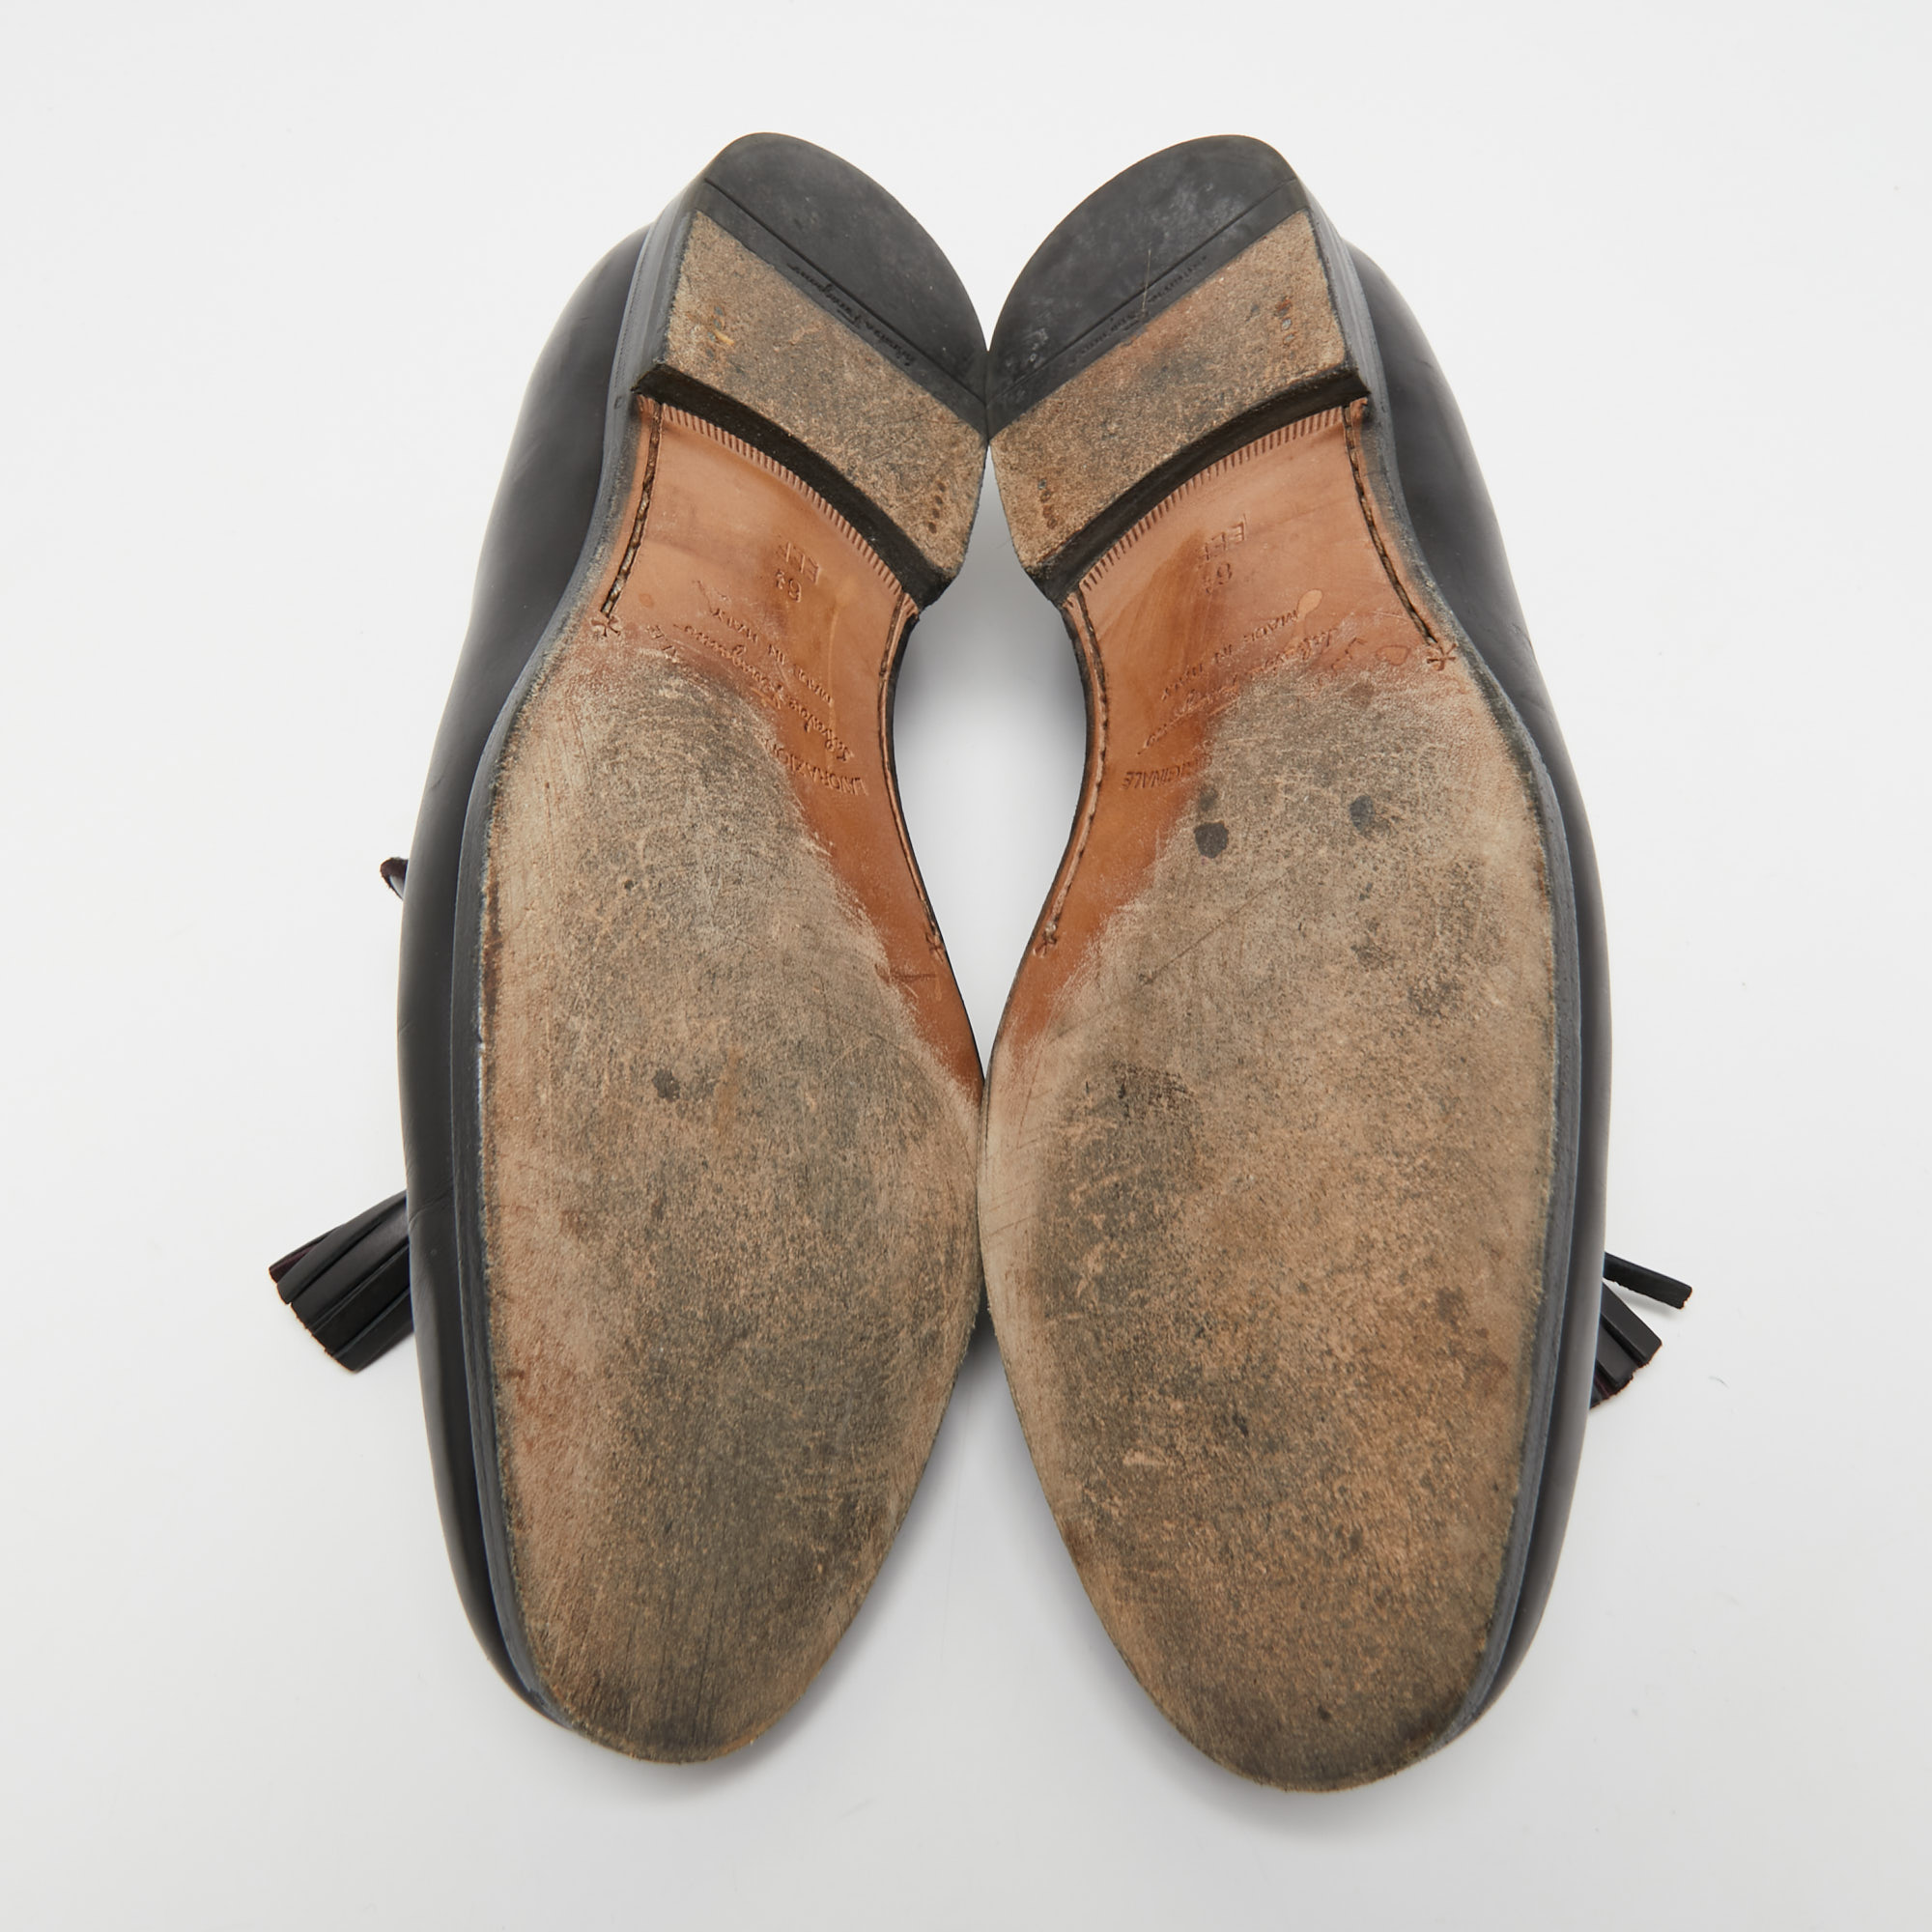 Salvatore Ferragamo Black Leather Tassel Loafers Size 40.5